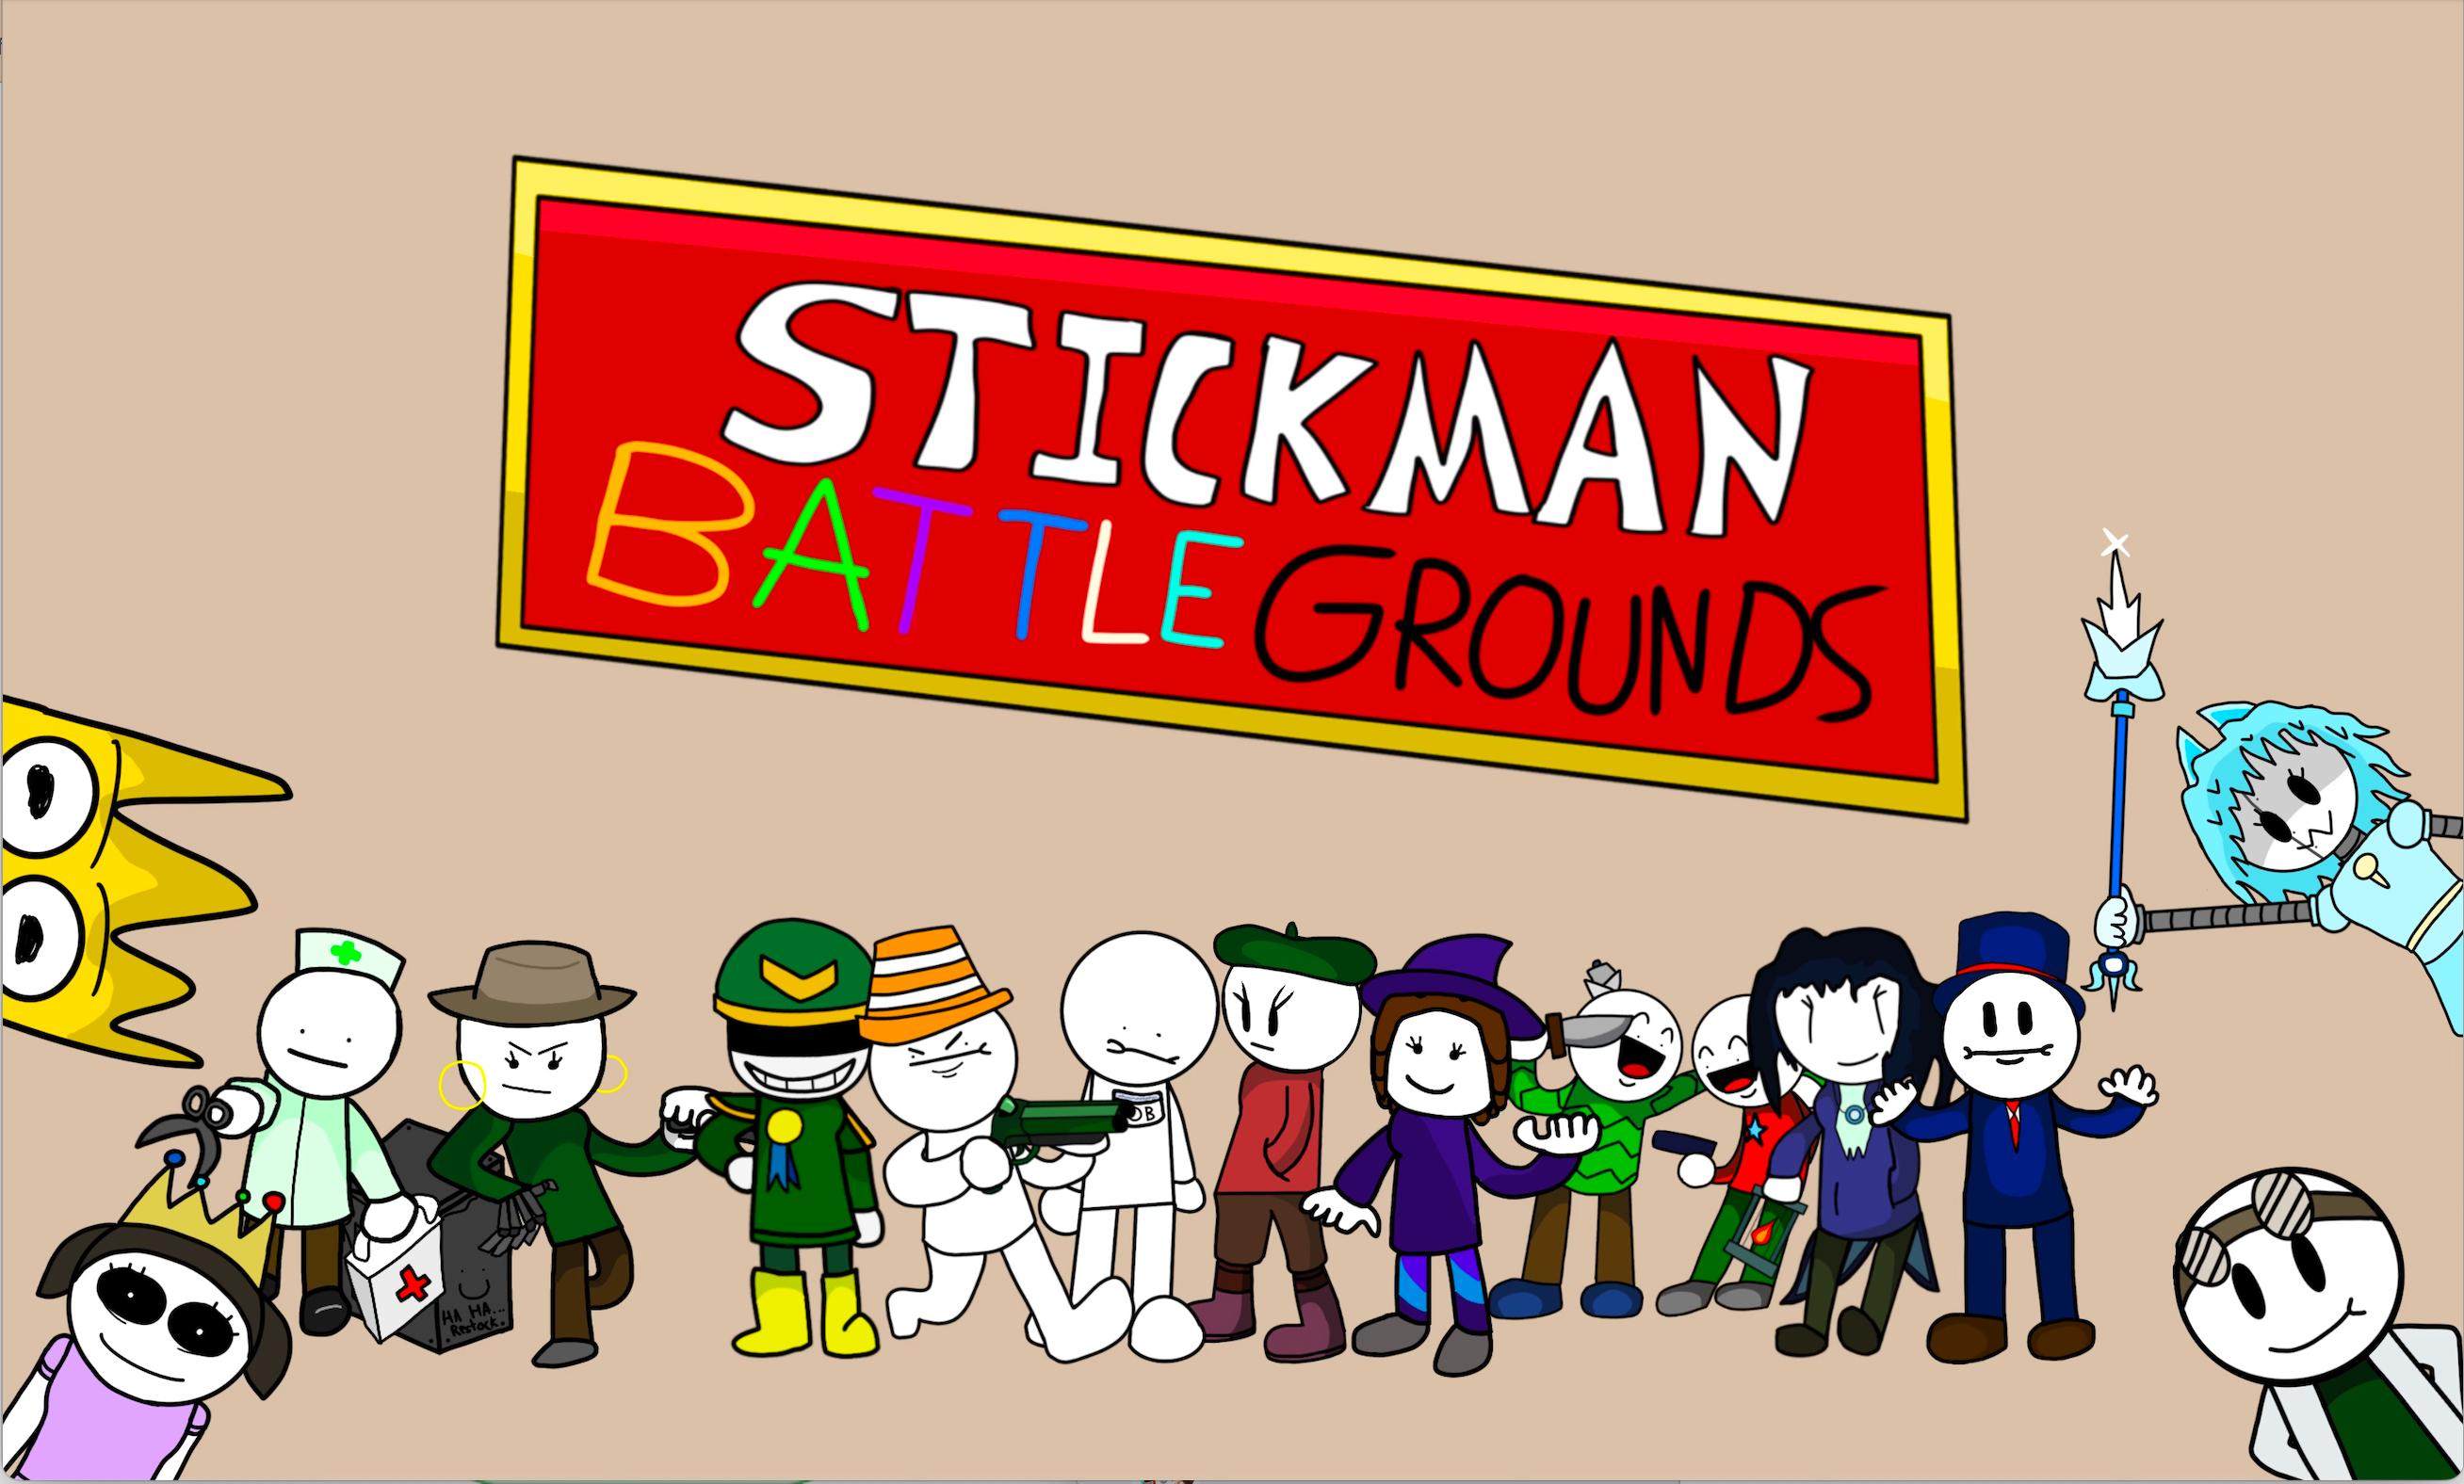 Stickman Battlegrounds - a game by Bennu Brothers Studios